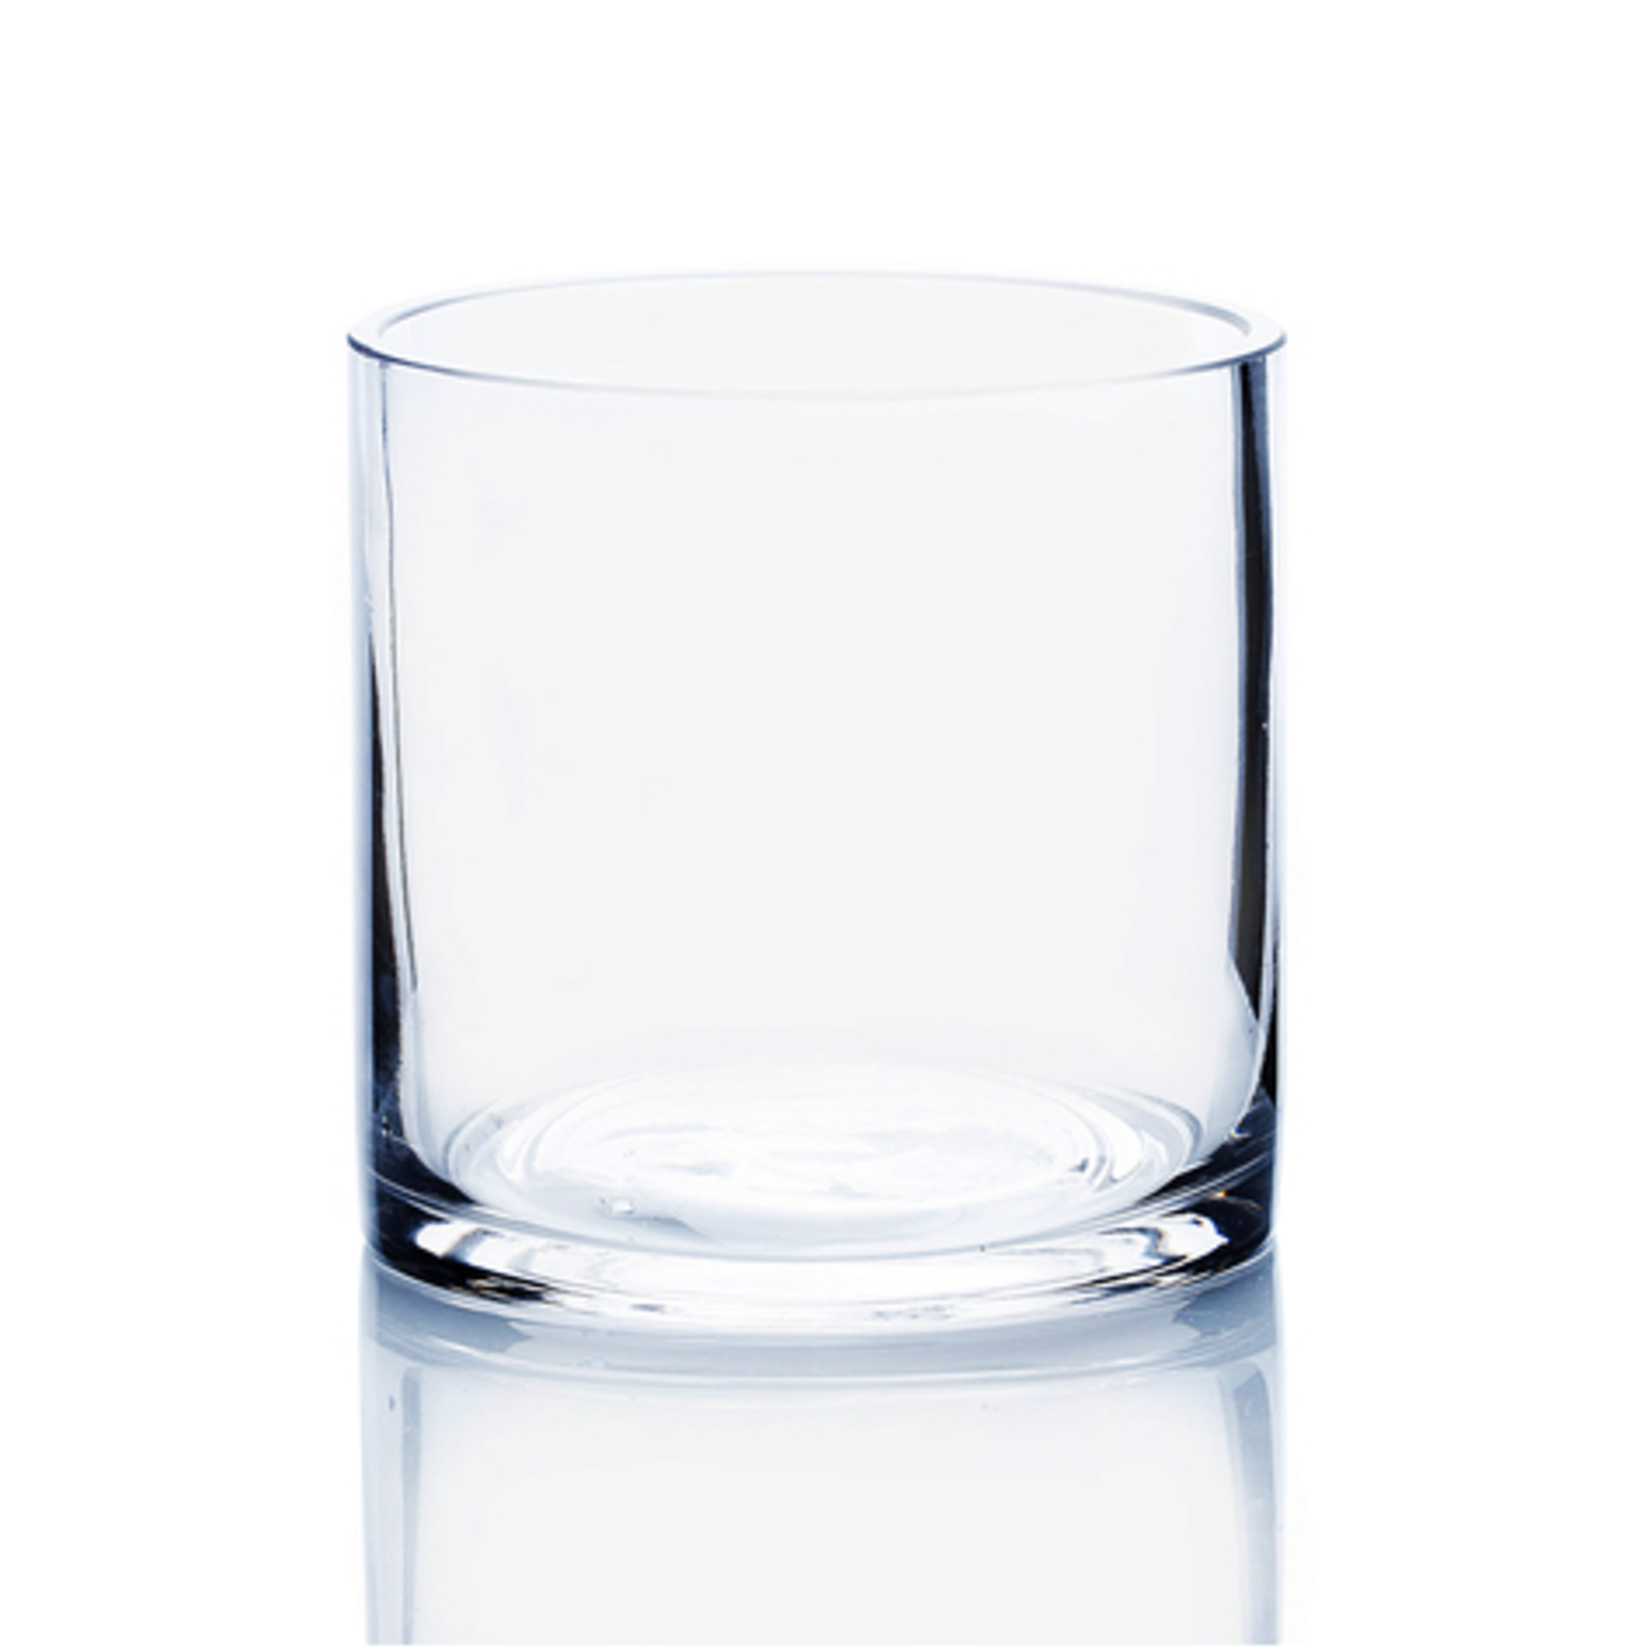 5"H X 5"D CLEAR GLASS CYLINDER VASE